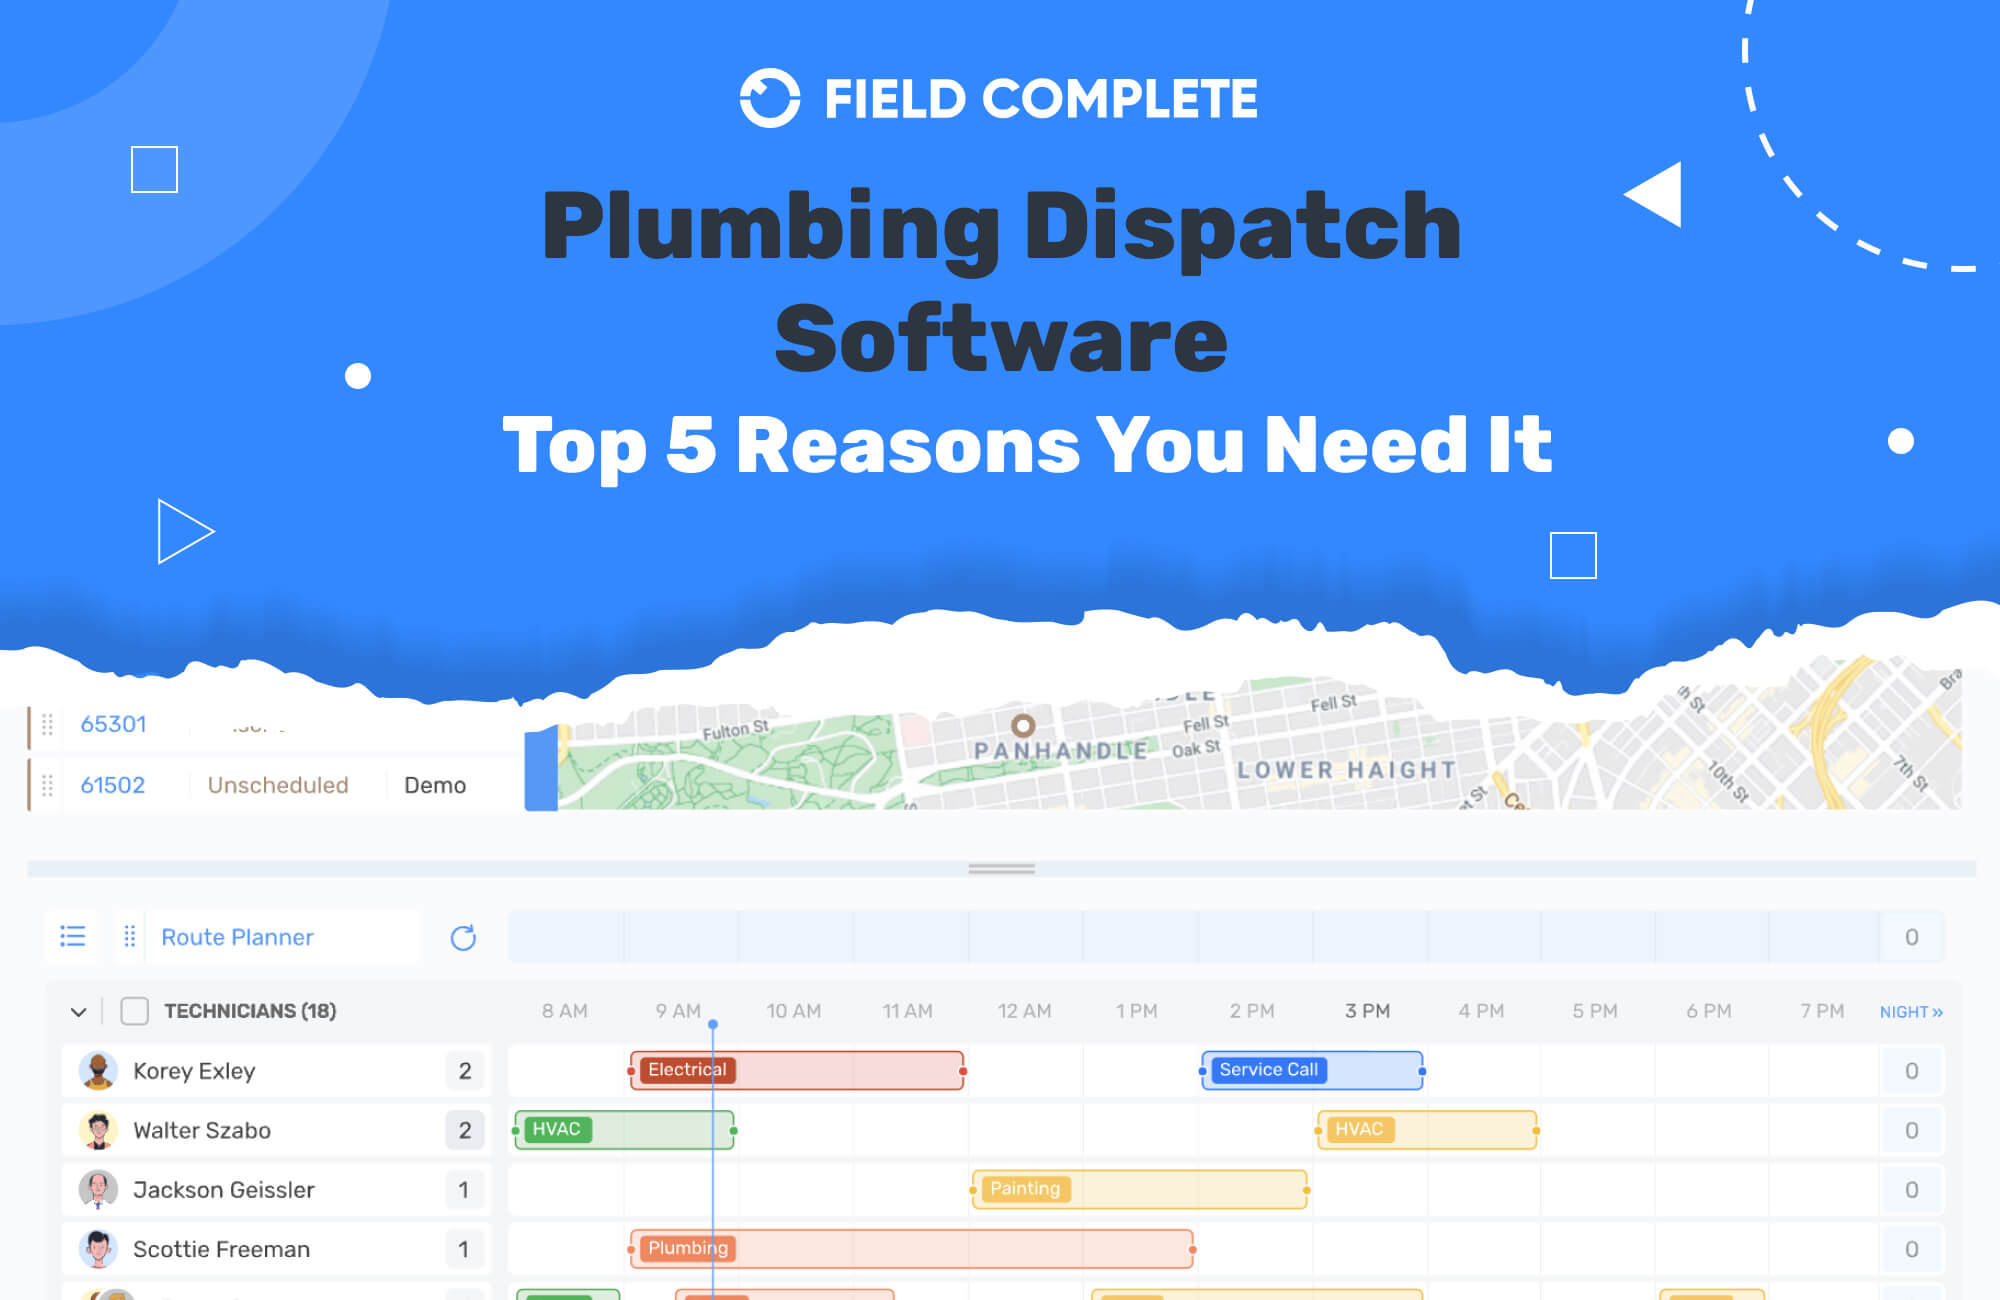 Plumbing Dispatch Software: Top 5 Reasons You Need It